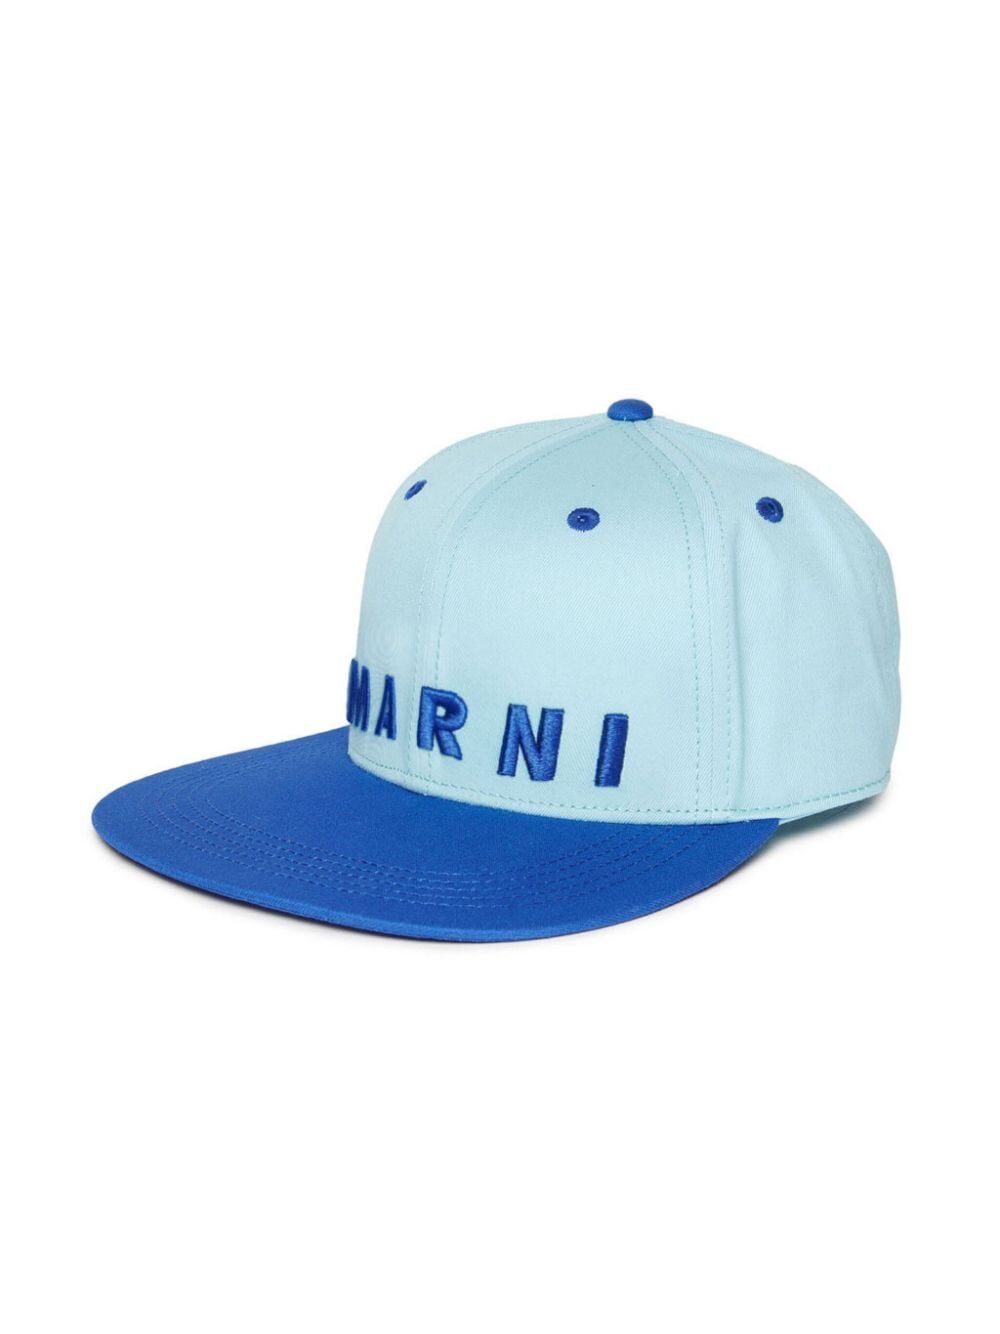 Marni Mf29u Hat In Blue